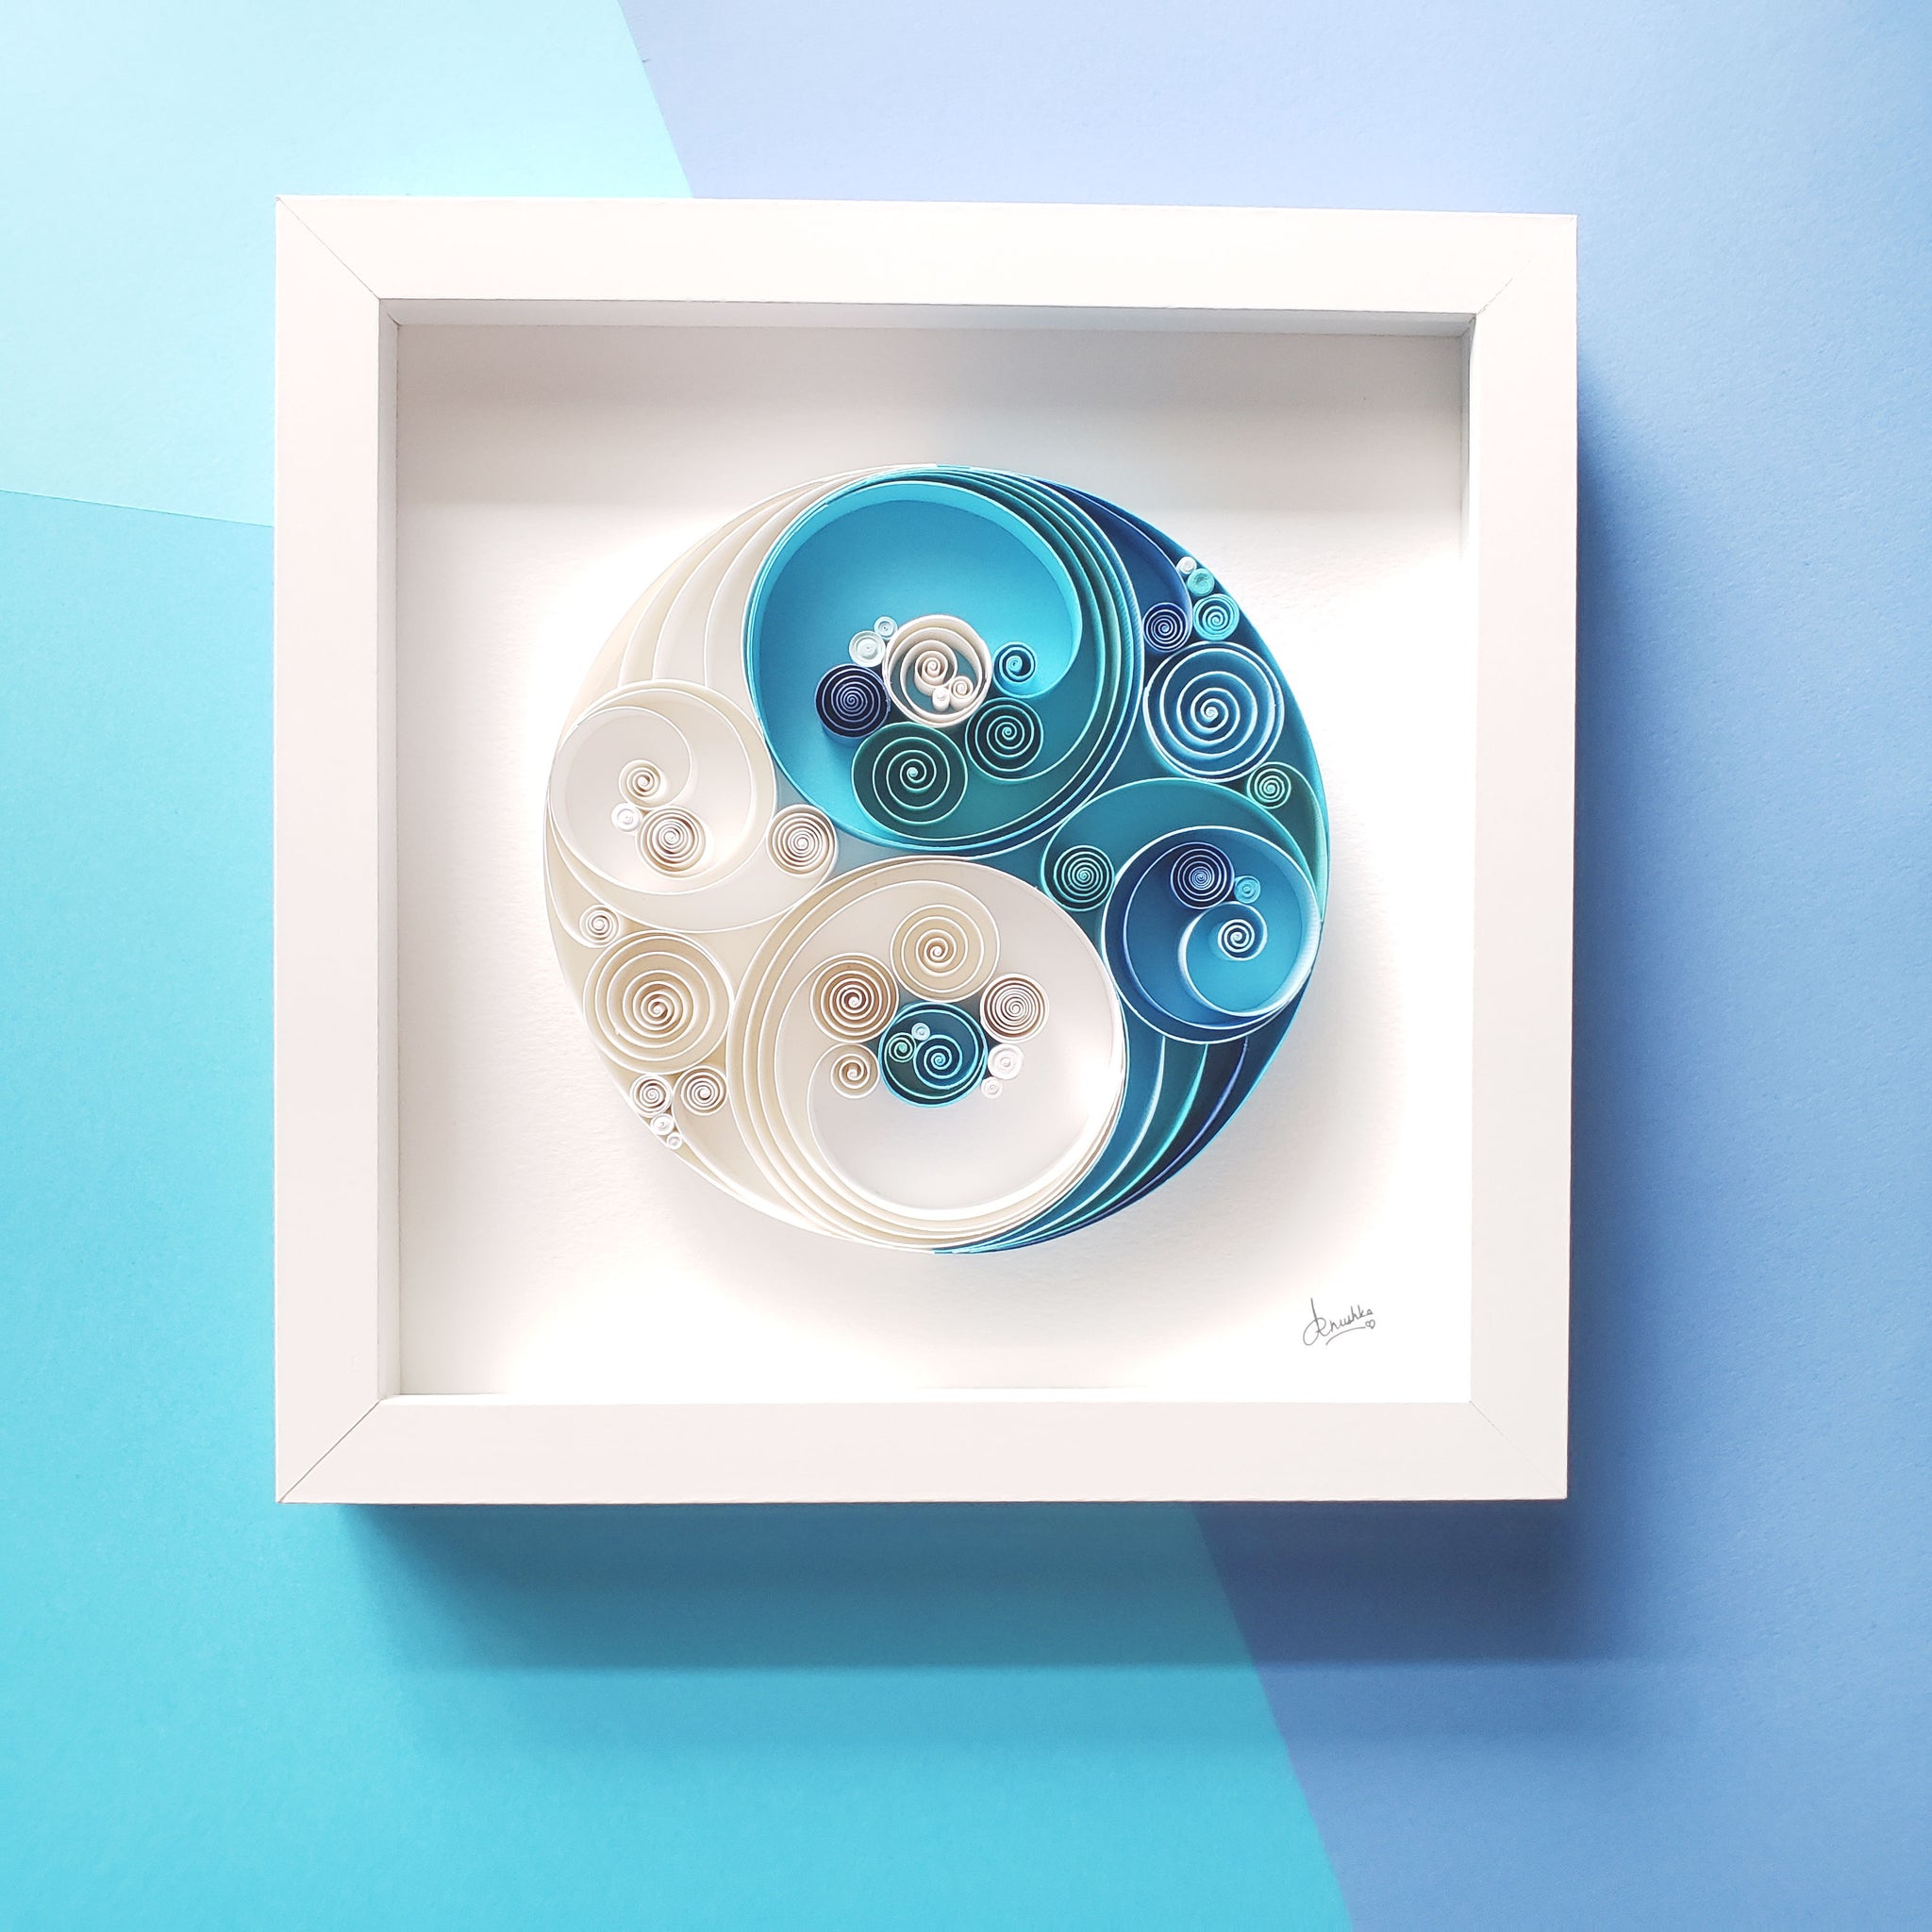 Spiritual gift,Unique Gift.yin yang,blue white art,Birthday Gift,harmony,balance gift,chinese symbol,gift for yoga lover,Wall decor frame, white frame